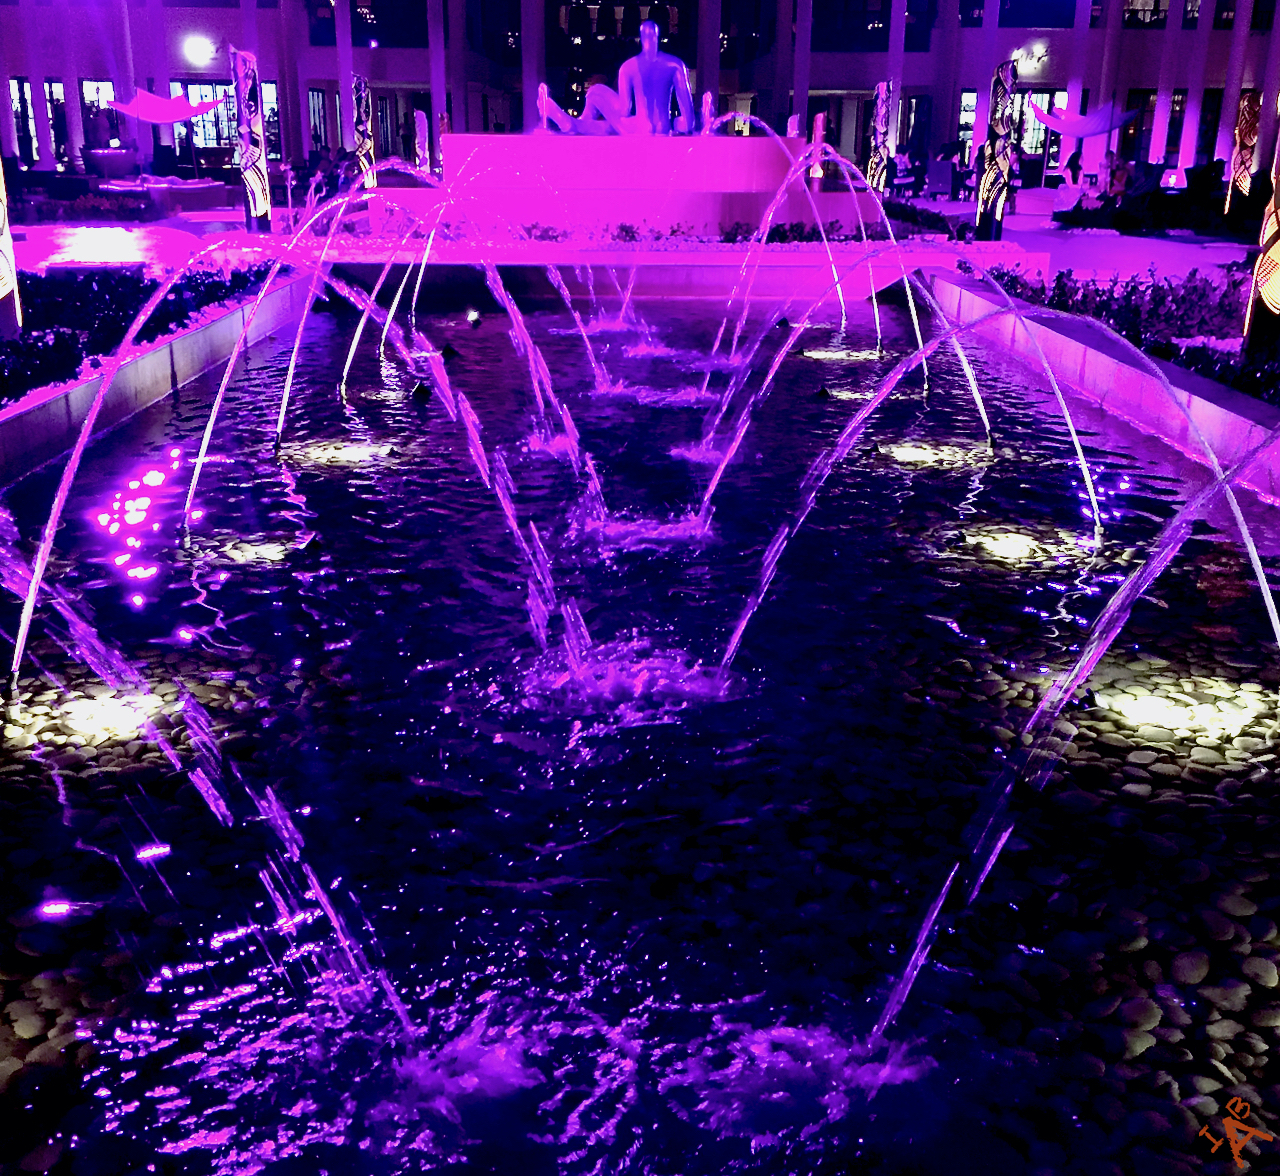 Resort fountain pool bathed in purple light.